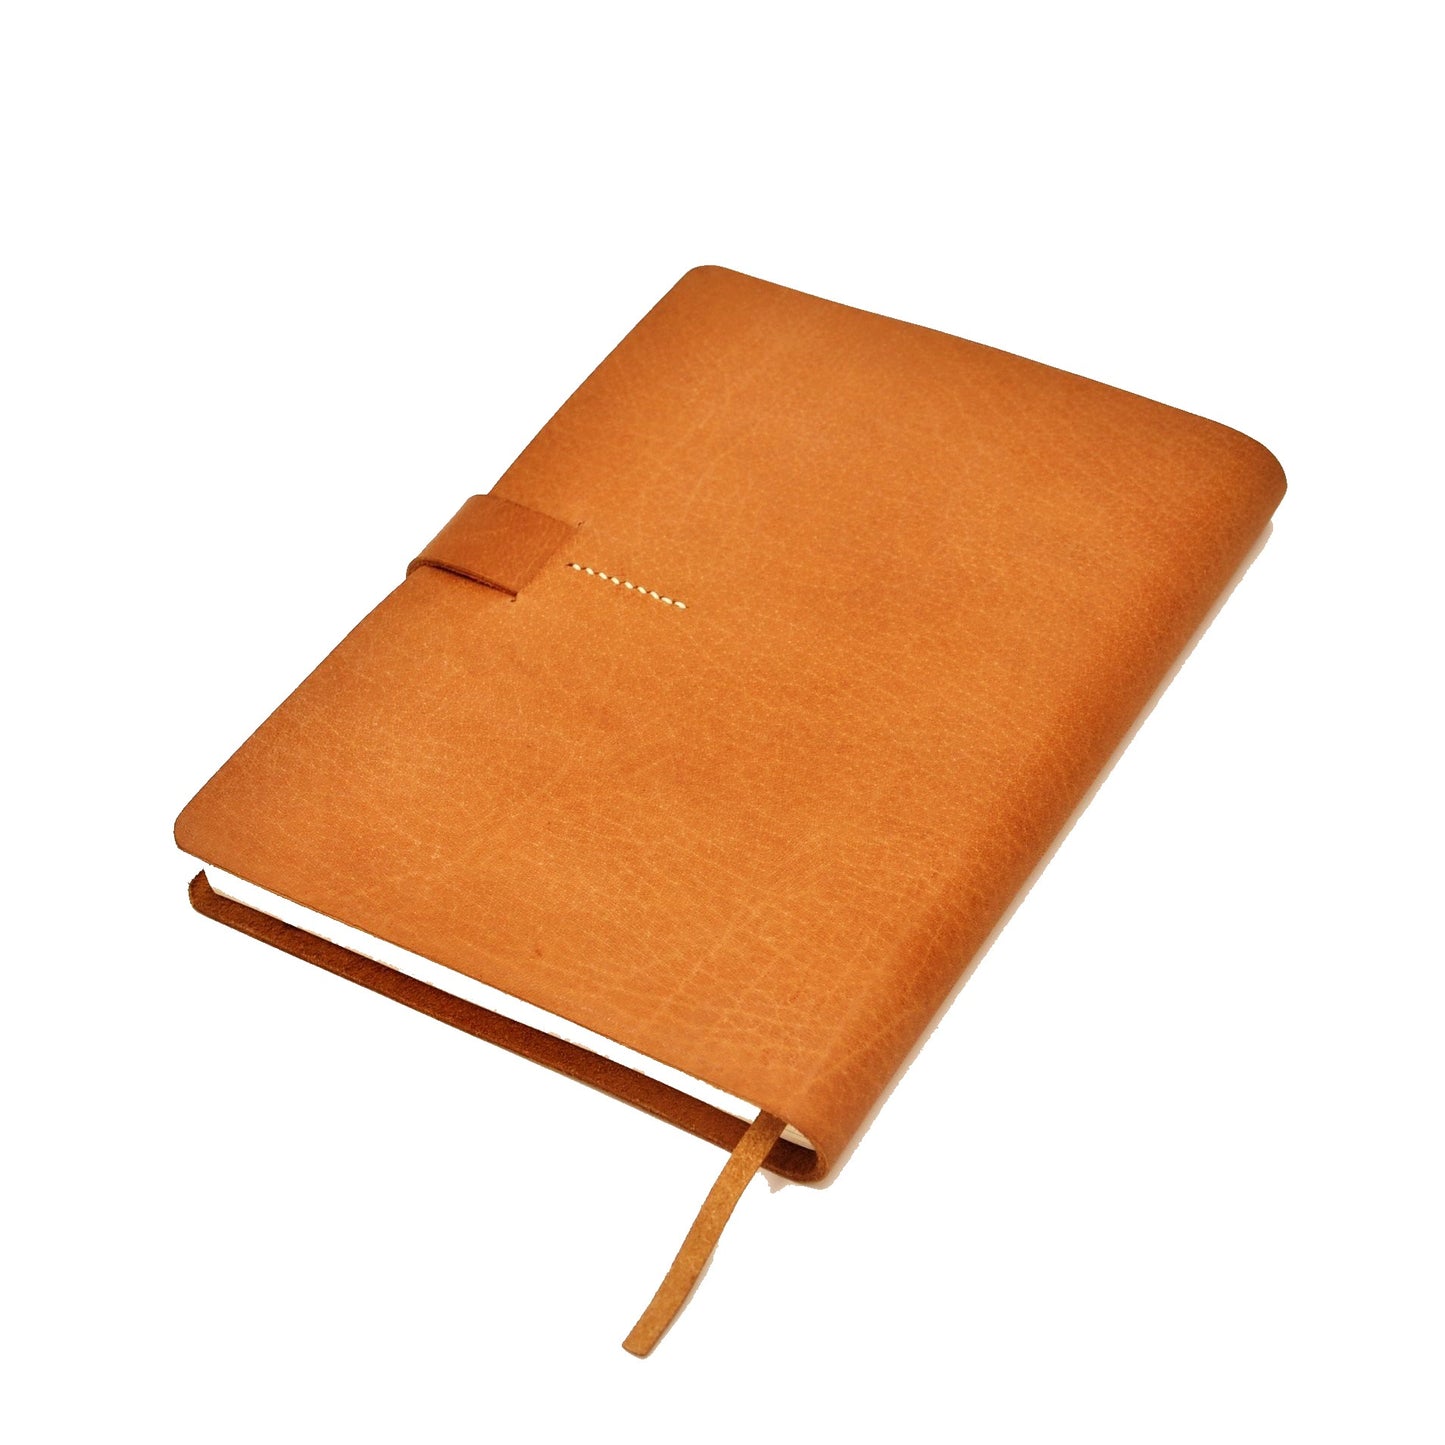 HERITAGE A5-P Leather Plain Designer's Journal